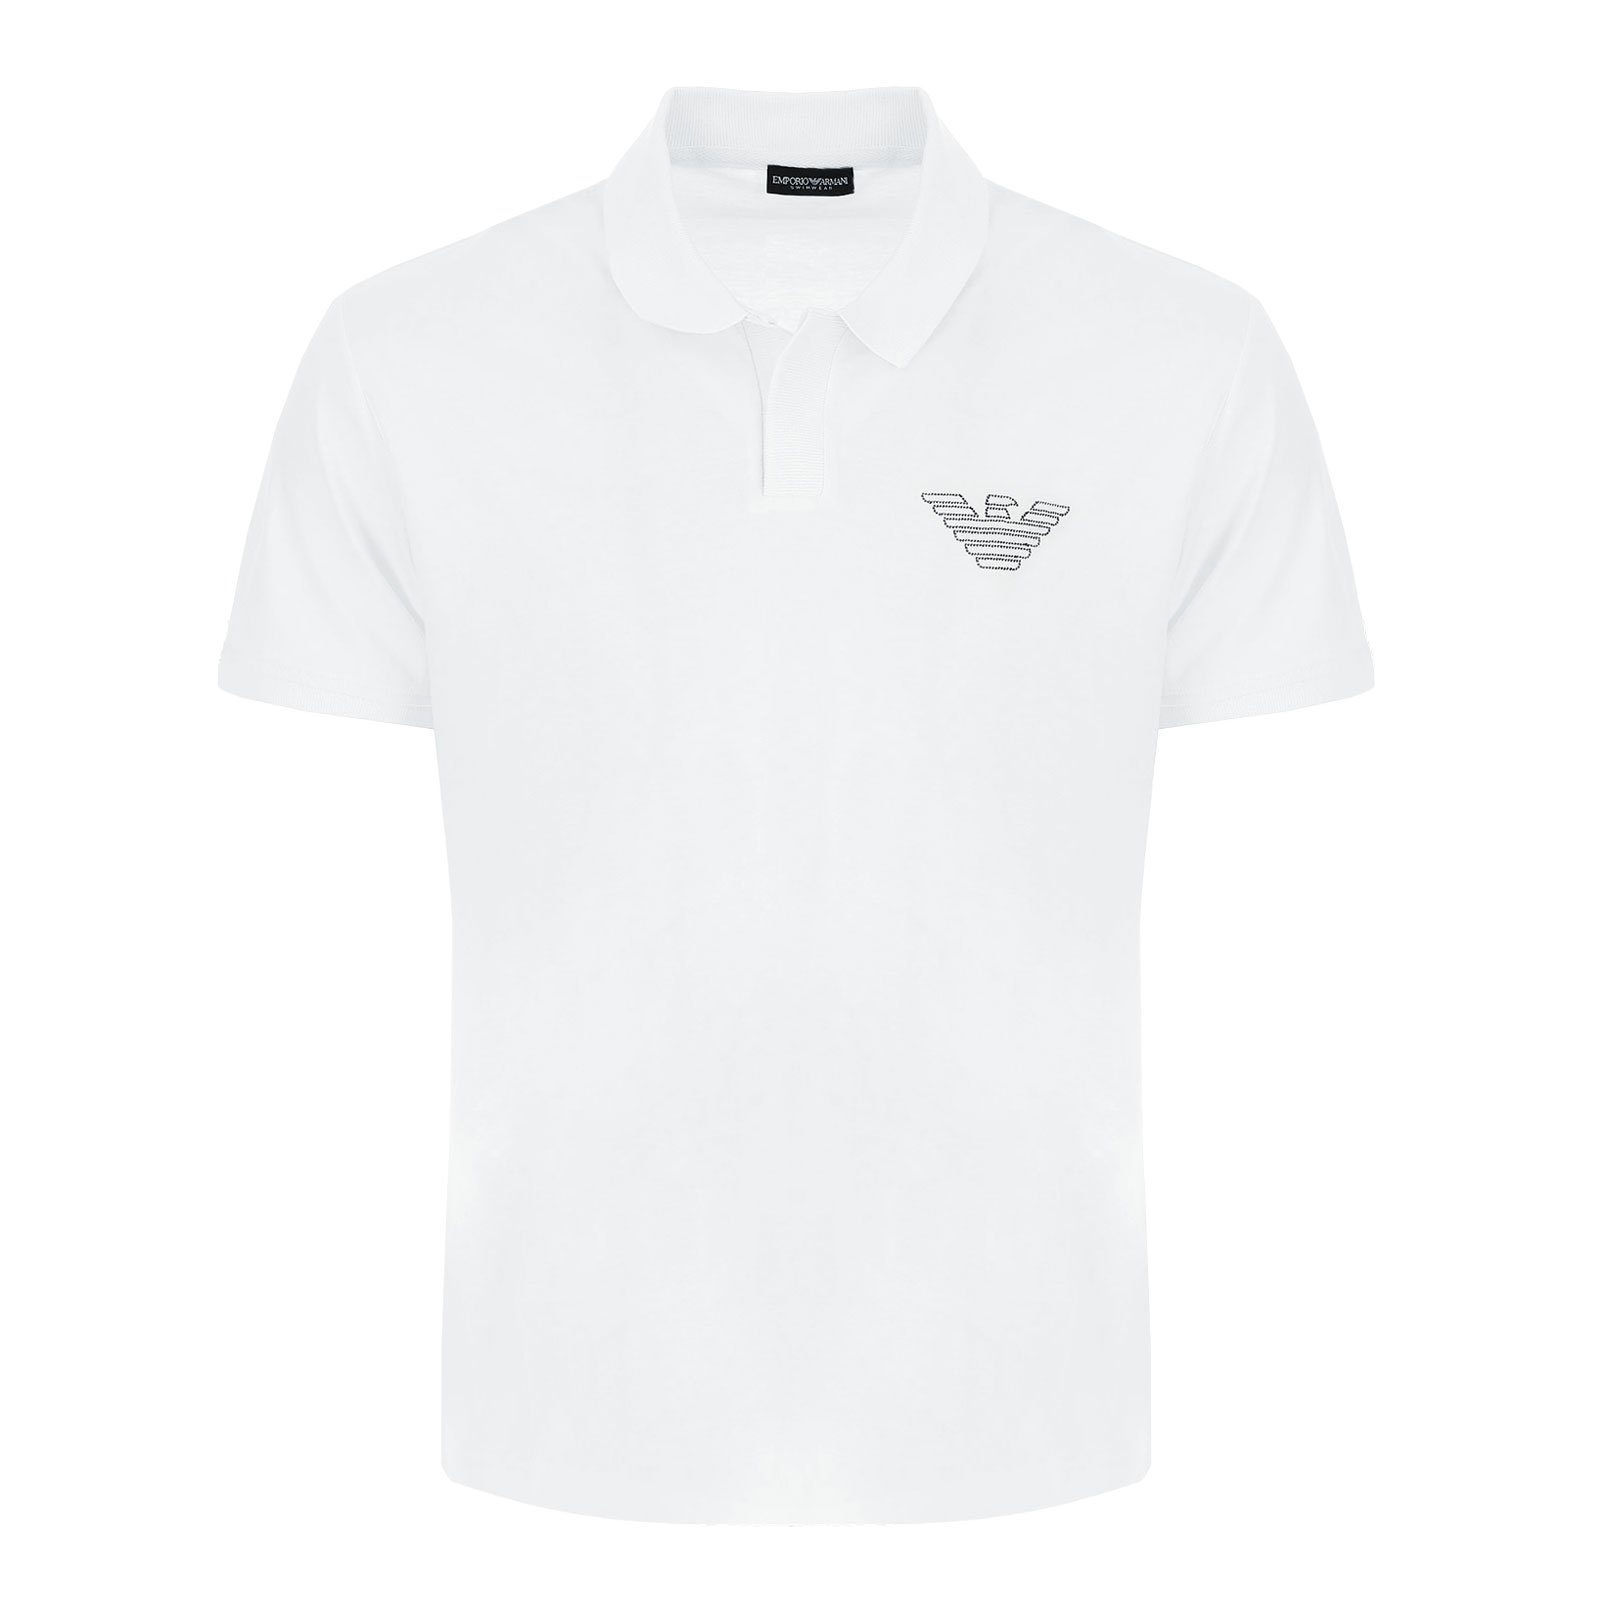 Emporio Armani Poloshirt großem 00010 Logo white Beachwear Polo mit auf Brust der